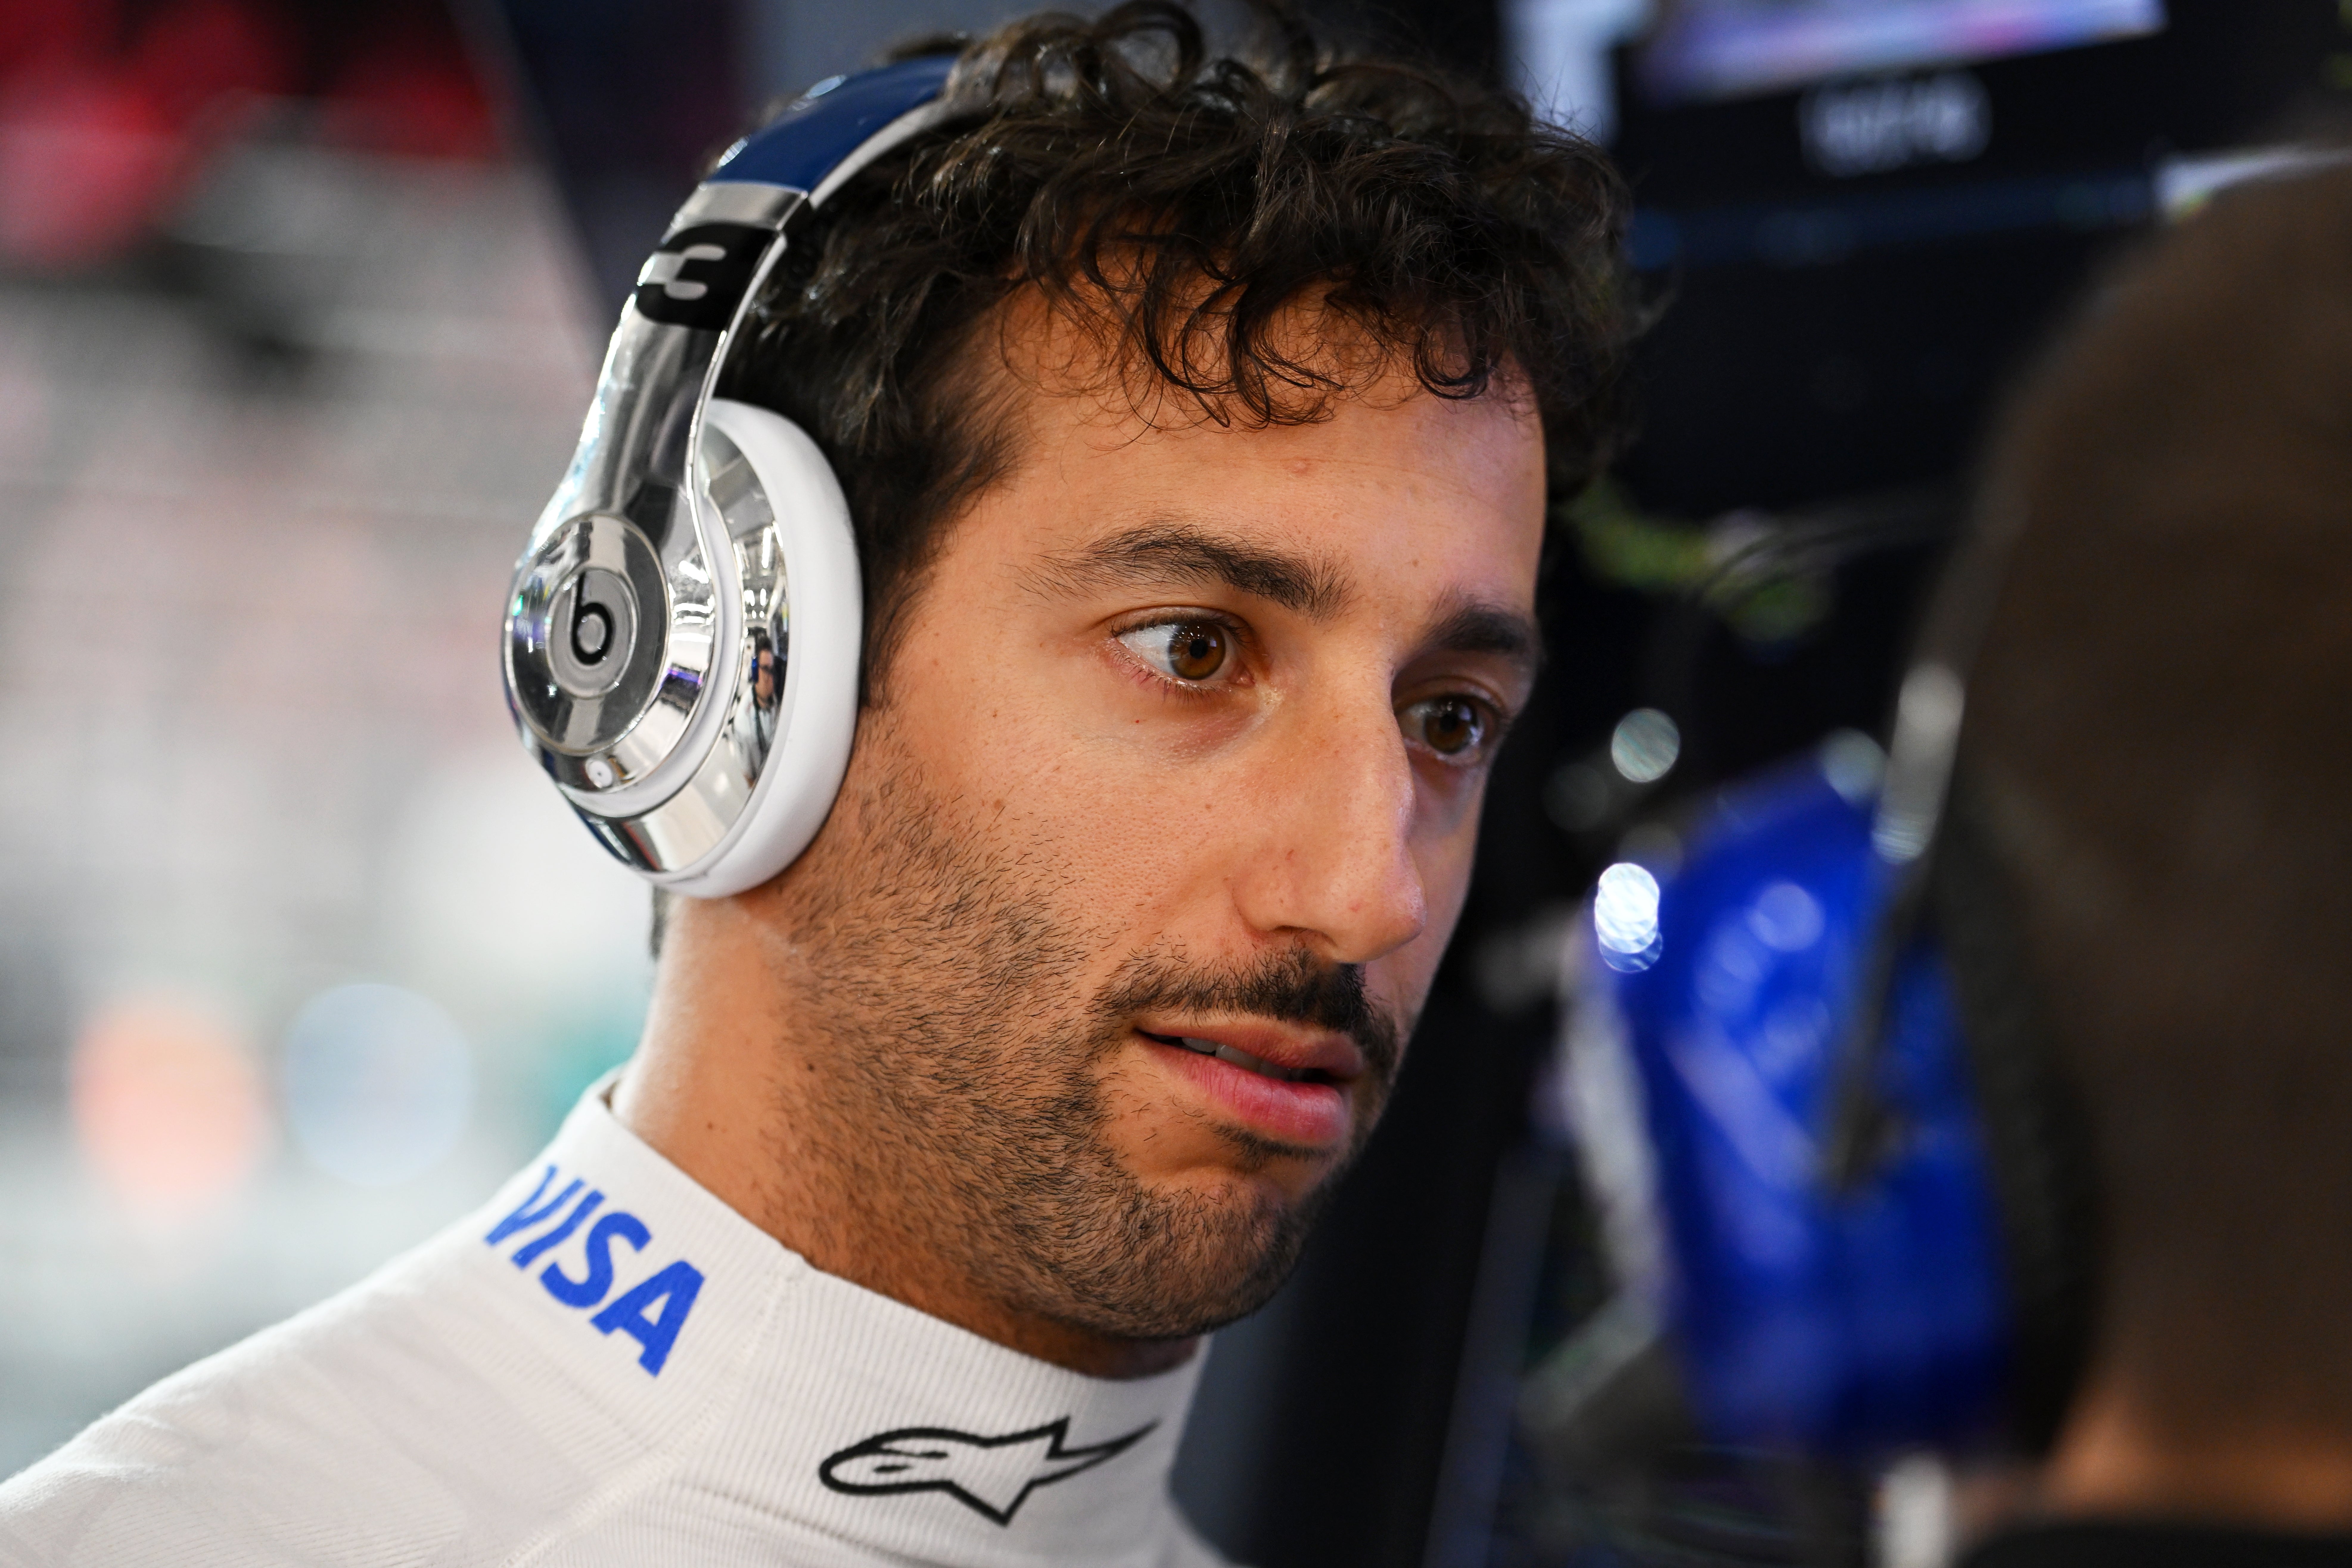 Daniel Ricciardo is eyeing his first points of the season this weekend in Australia